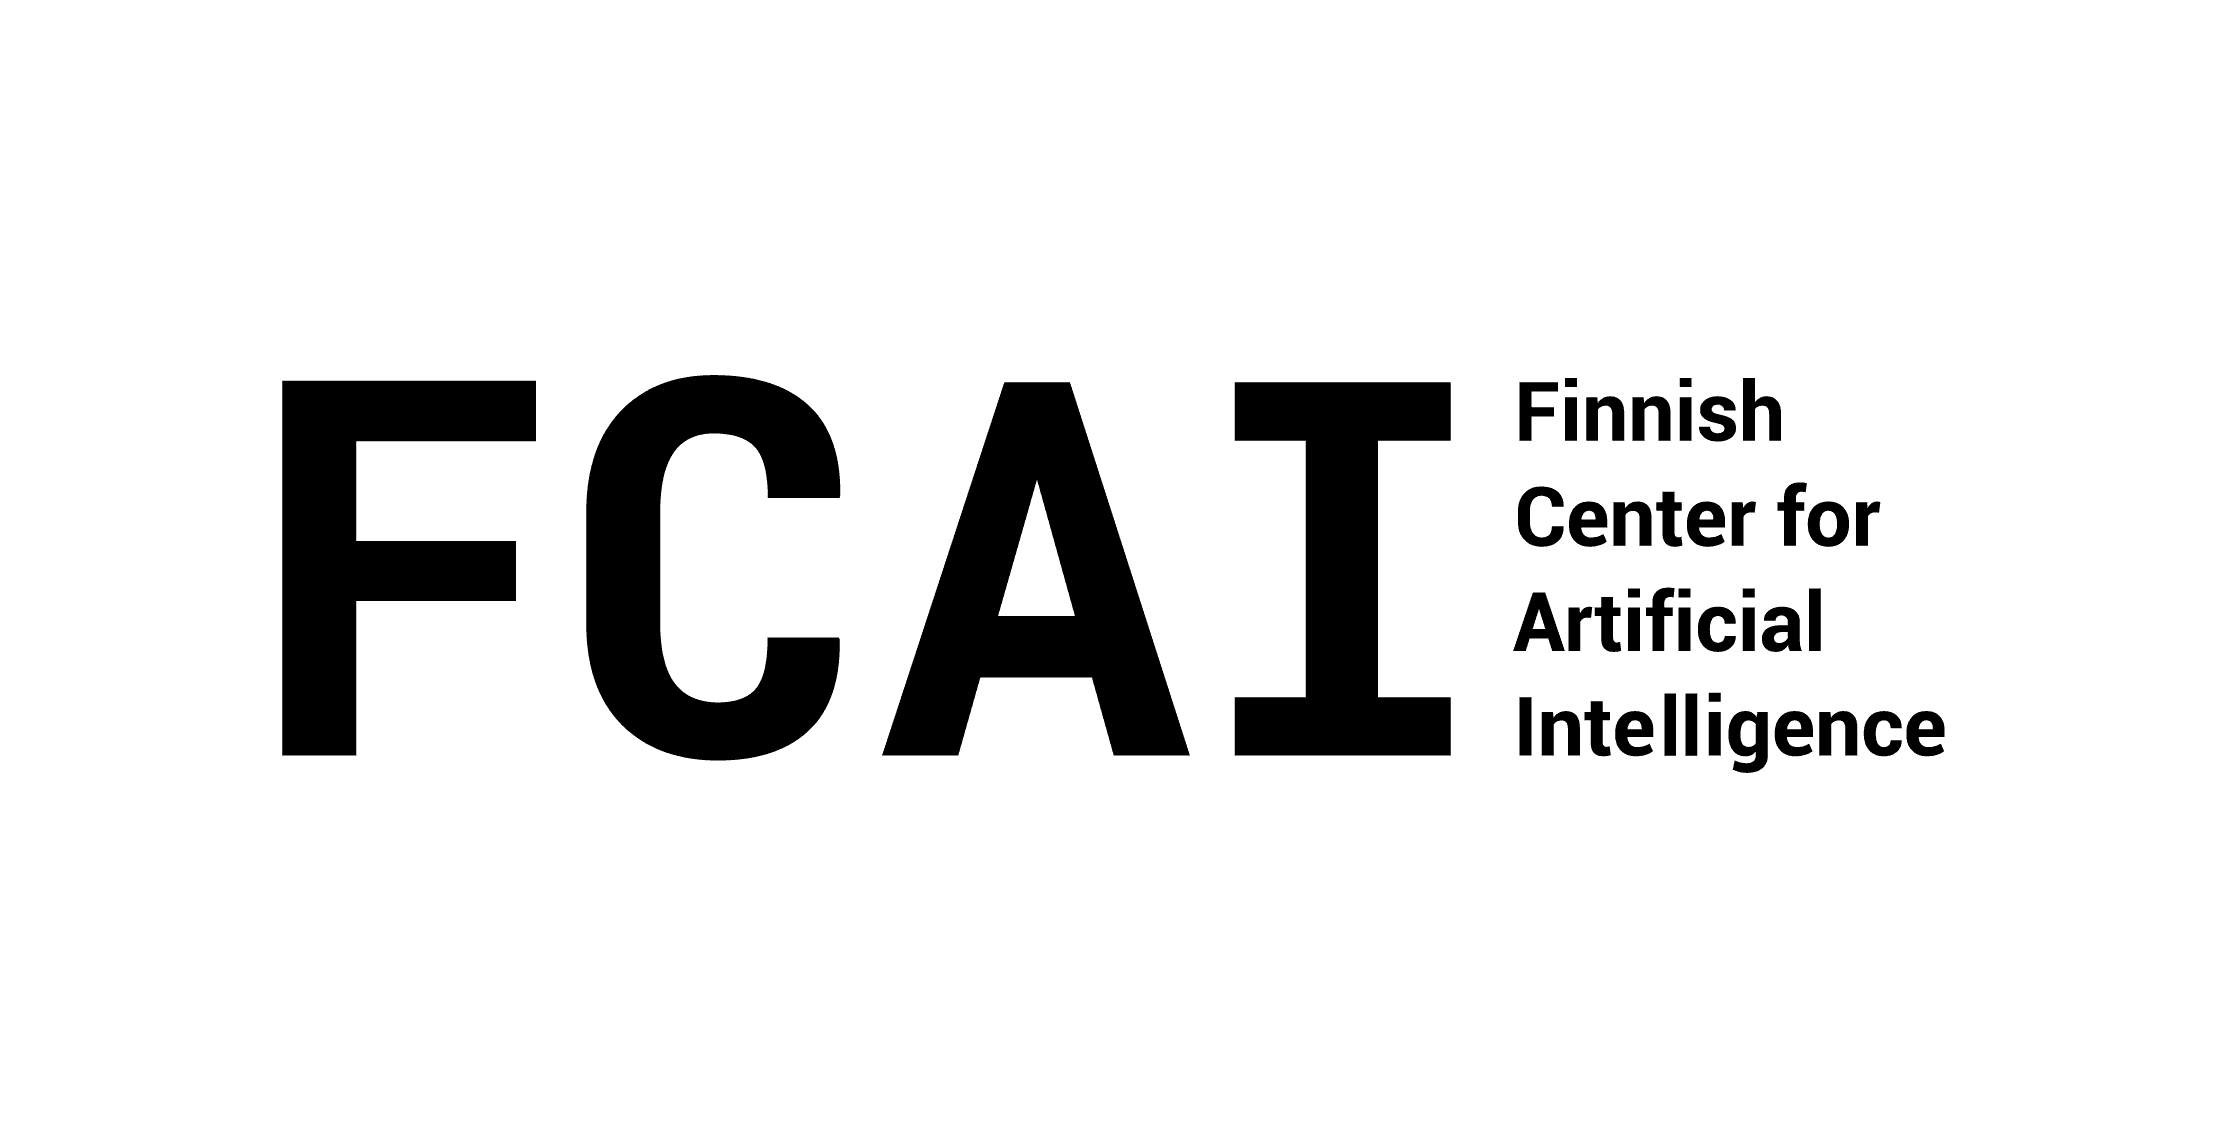 Finnish Center for Artificial Intelligence logo